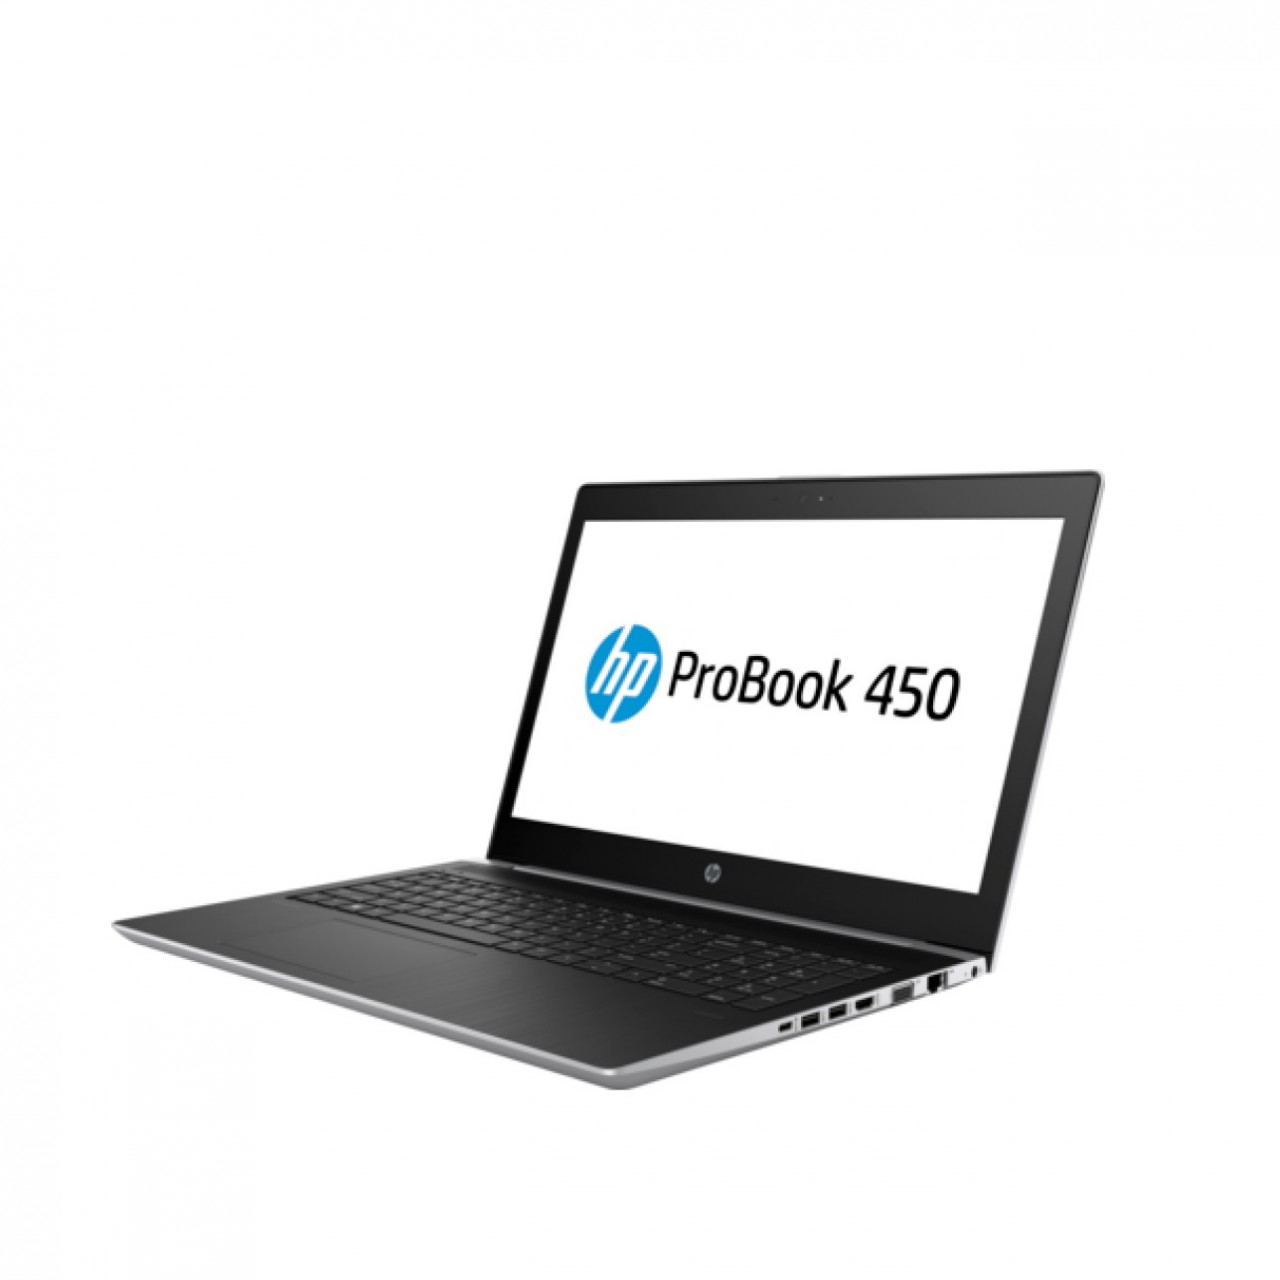 Hp Probook 450 G5 Laptop 156 Inch 4 Gb 1 Tb Core I5 8th Generation 2 Gb Nvidia 8393